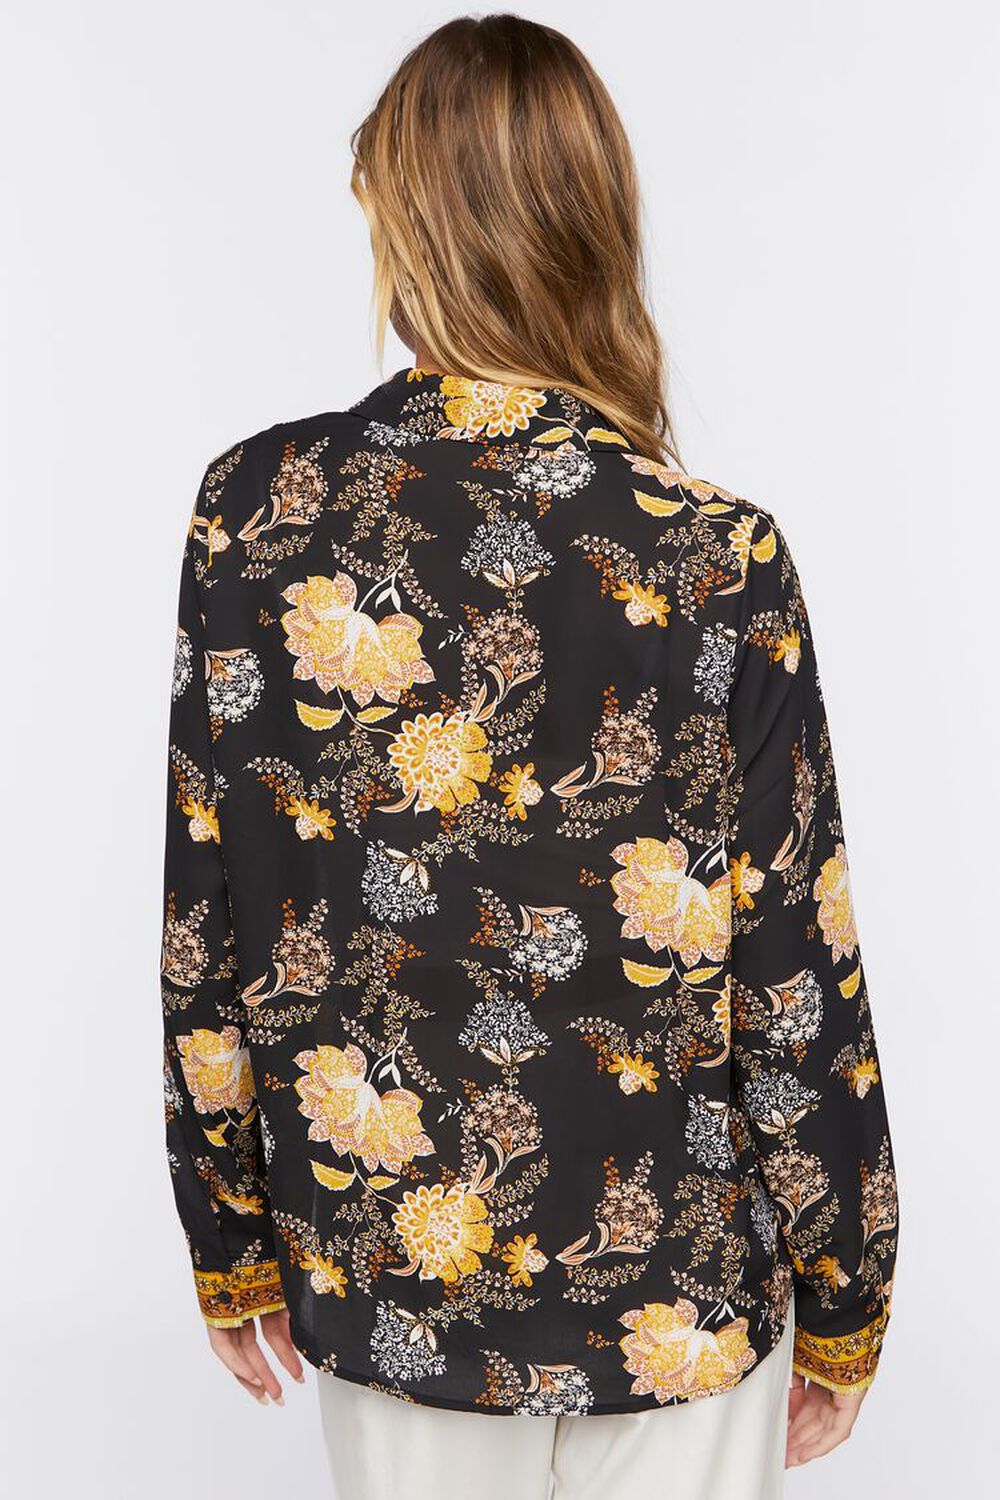 BLACK/MULTI Ornate Floral Print Shirt, image 3